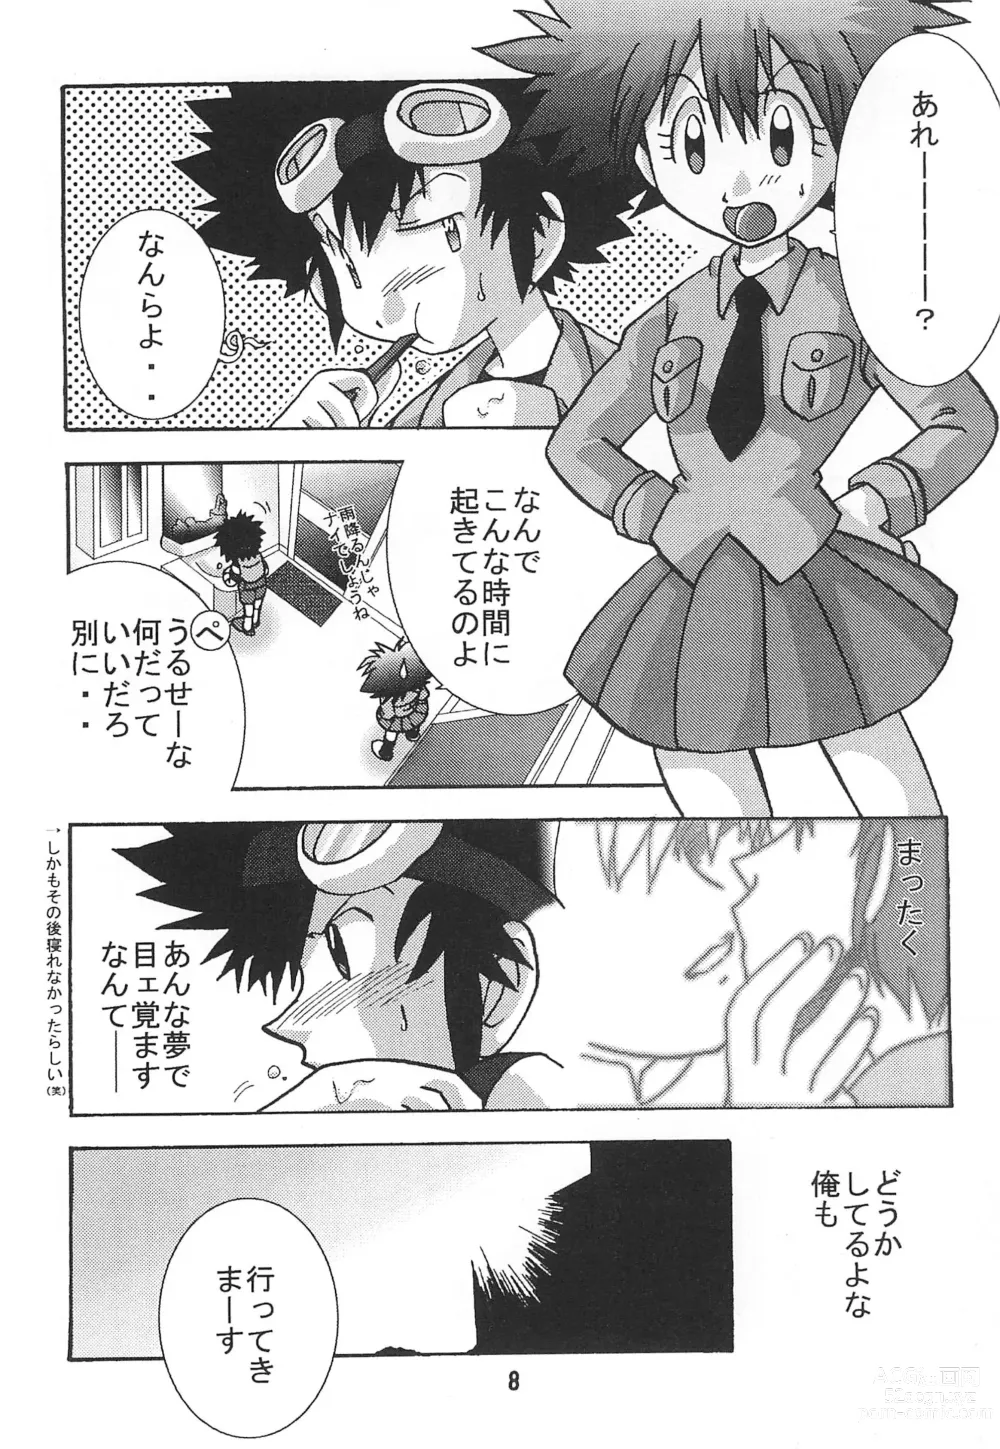 Page 8 of doujinshi SUBTLE RELATION